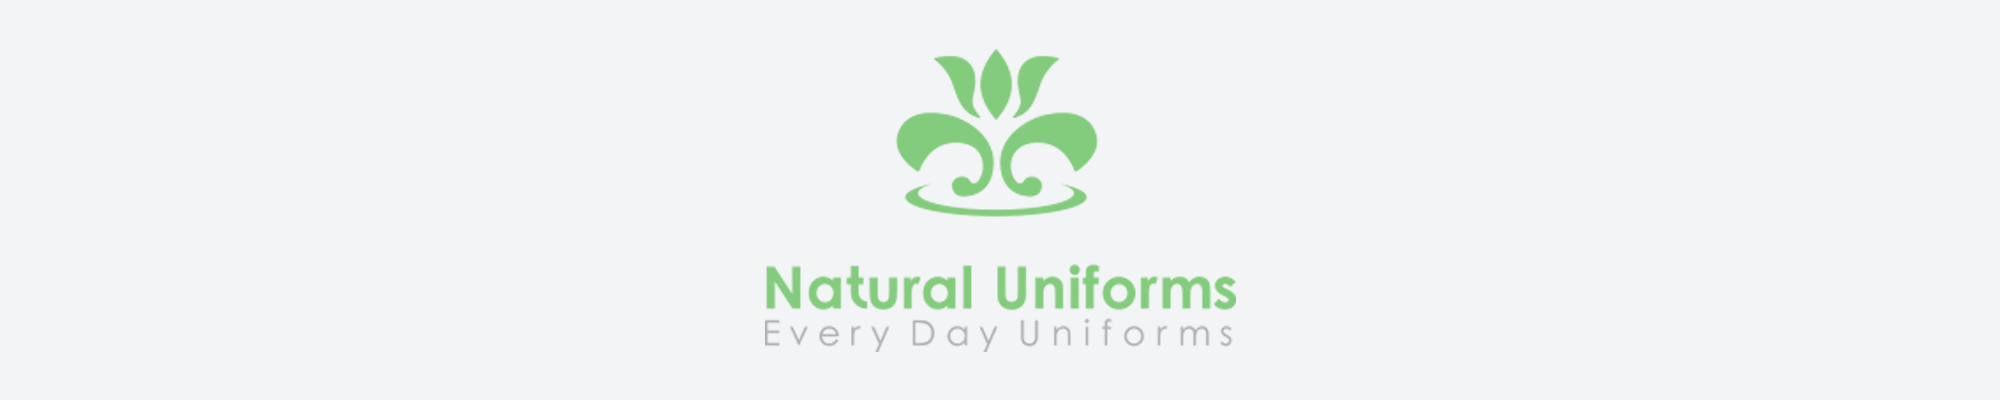 Natural Uniforms